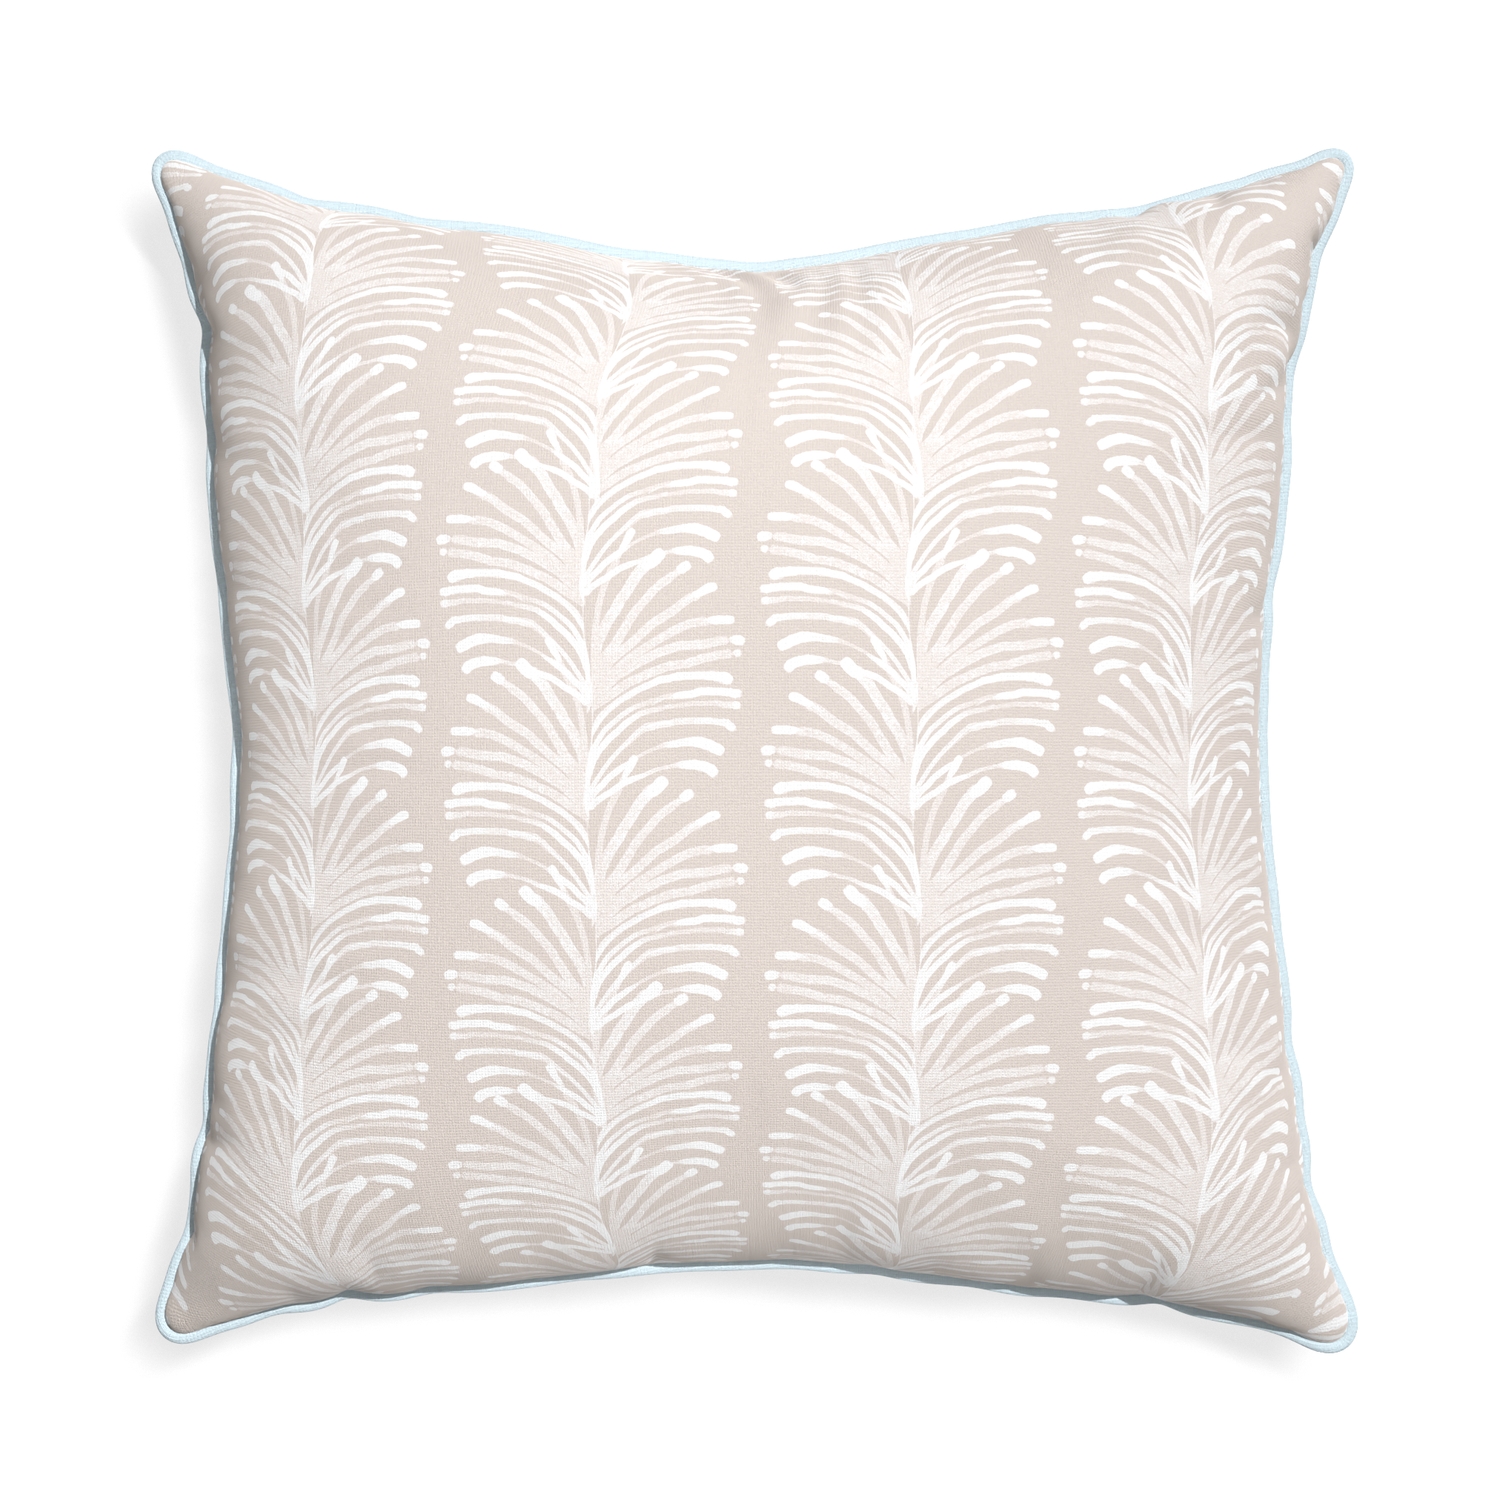 Euro-sham emma sand custom pillow with powder piping on white background